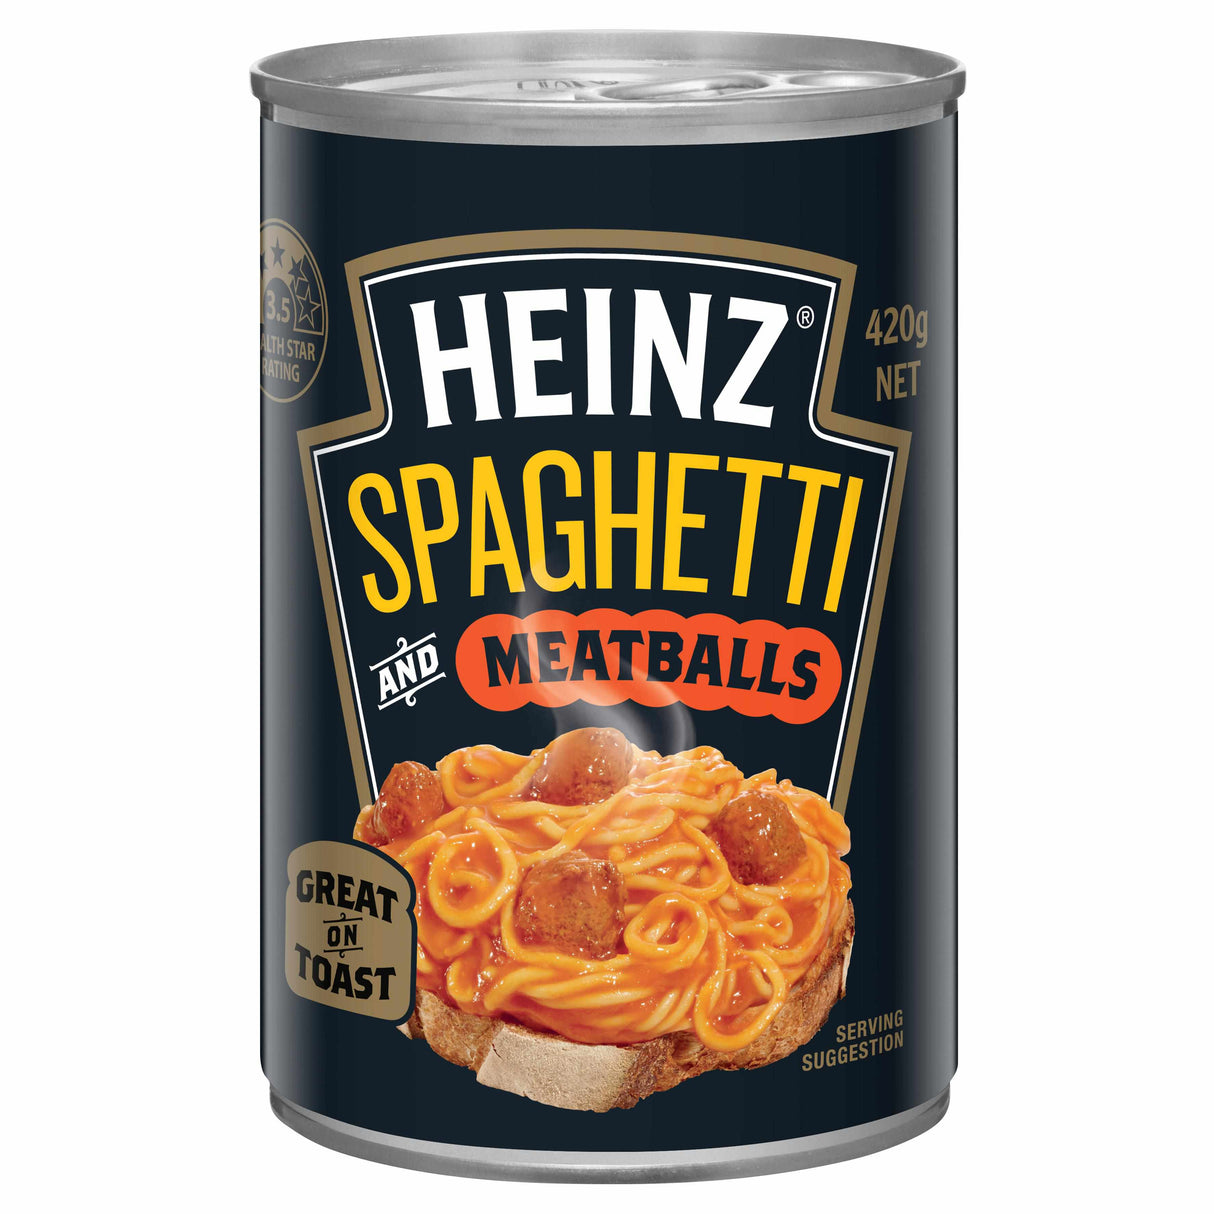 Heinz Spaghetti and Meatballs 420g